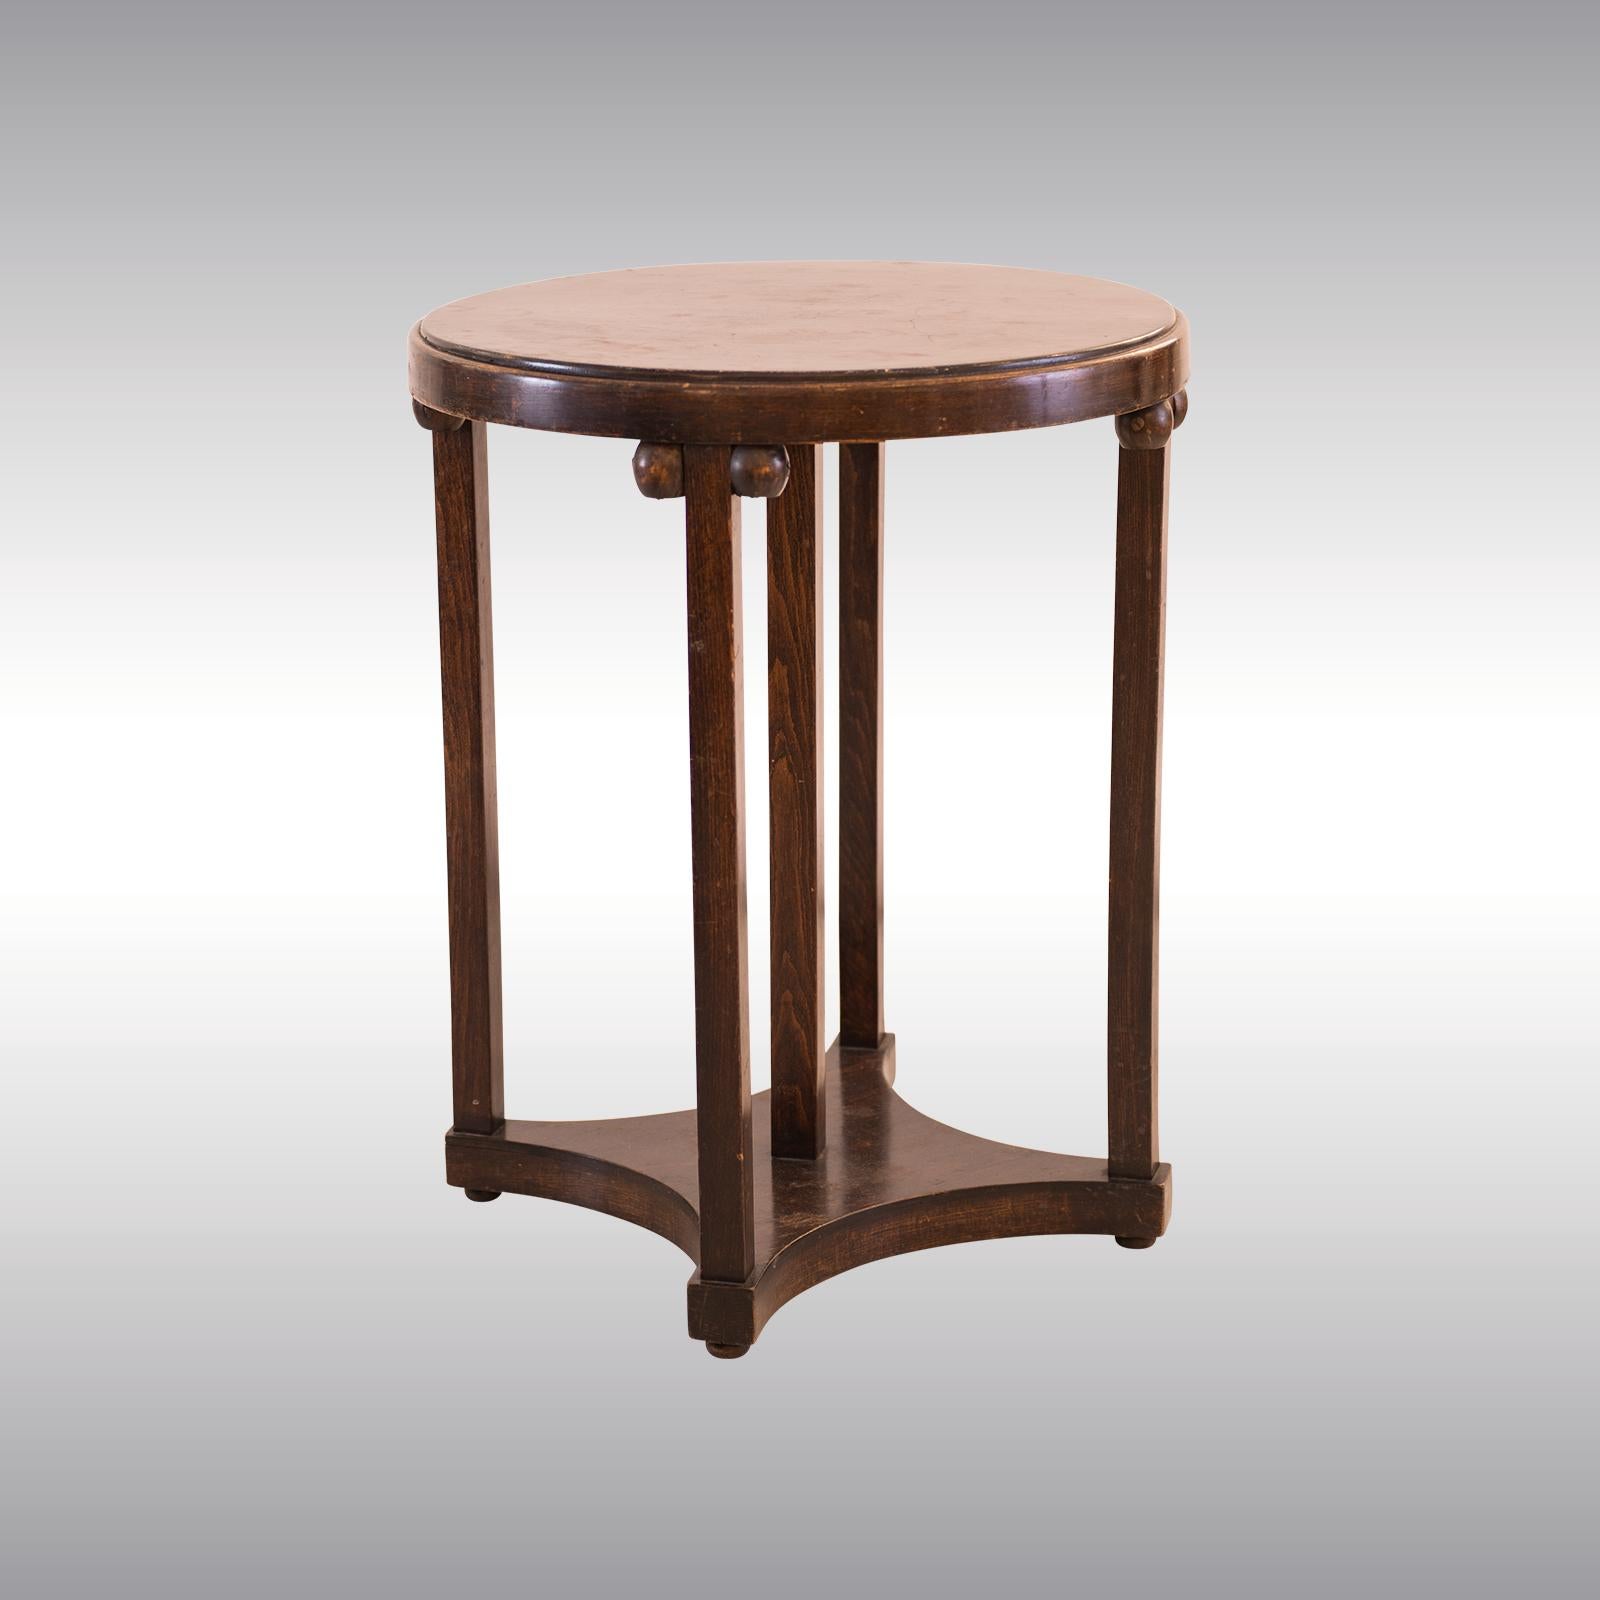 A petite coffee table by Josef Hoffmann from 1905 made by J&J Kohn in beechwood.